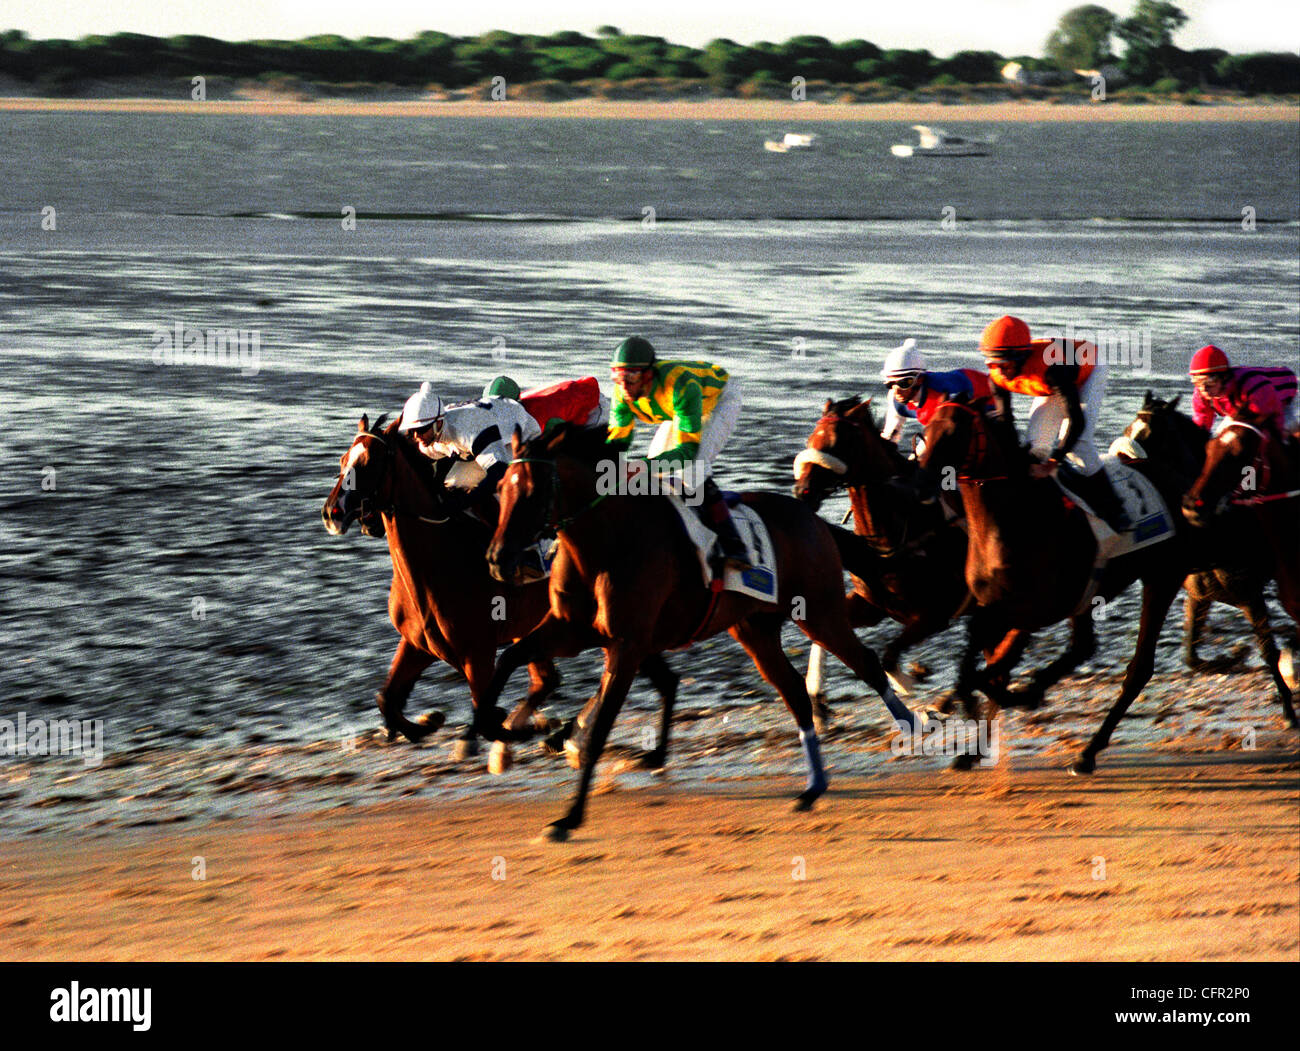 Carrera de caballos. Sanlúcar de Barrameda. Cádiz. Foto Stock